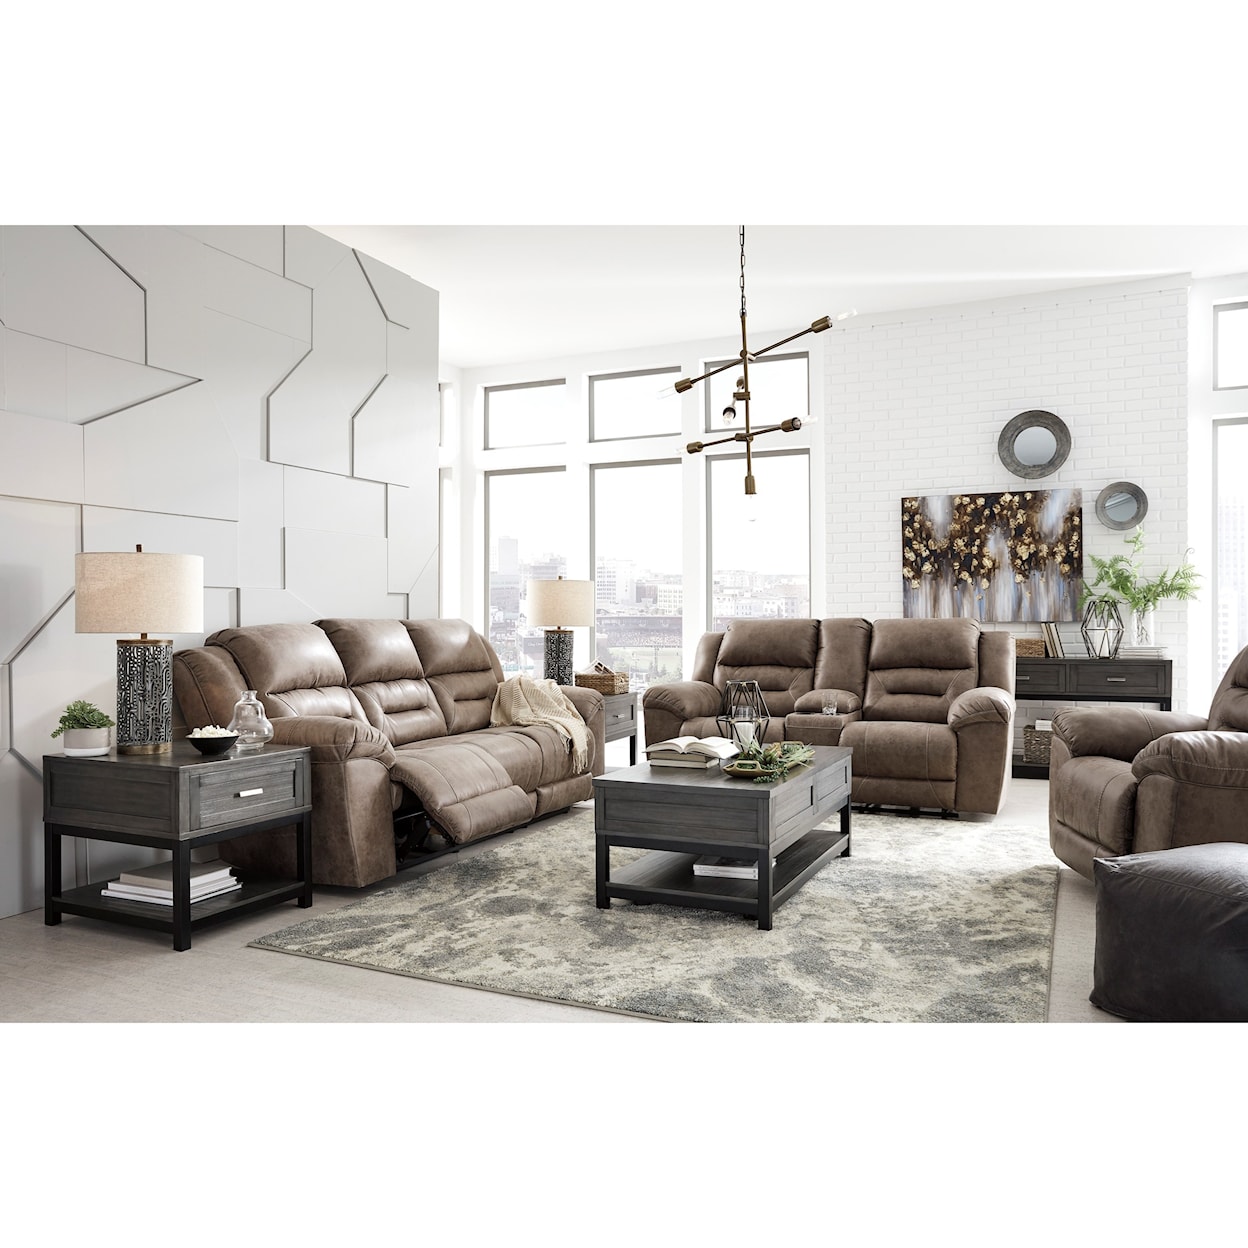 Ashley Furniture Signature Design Stoneland Power Reclining Living Room Group